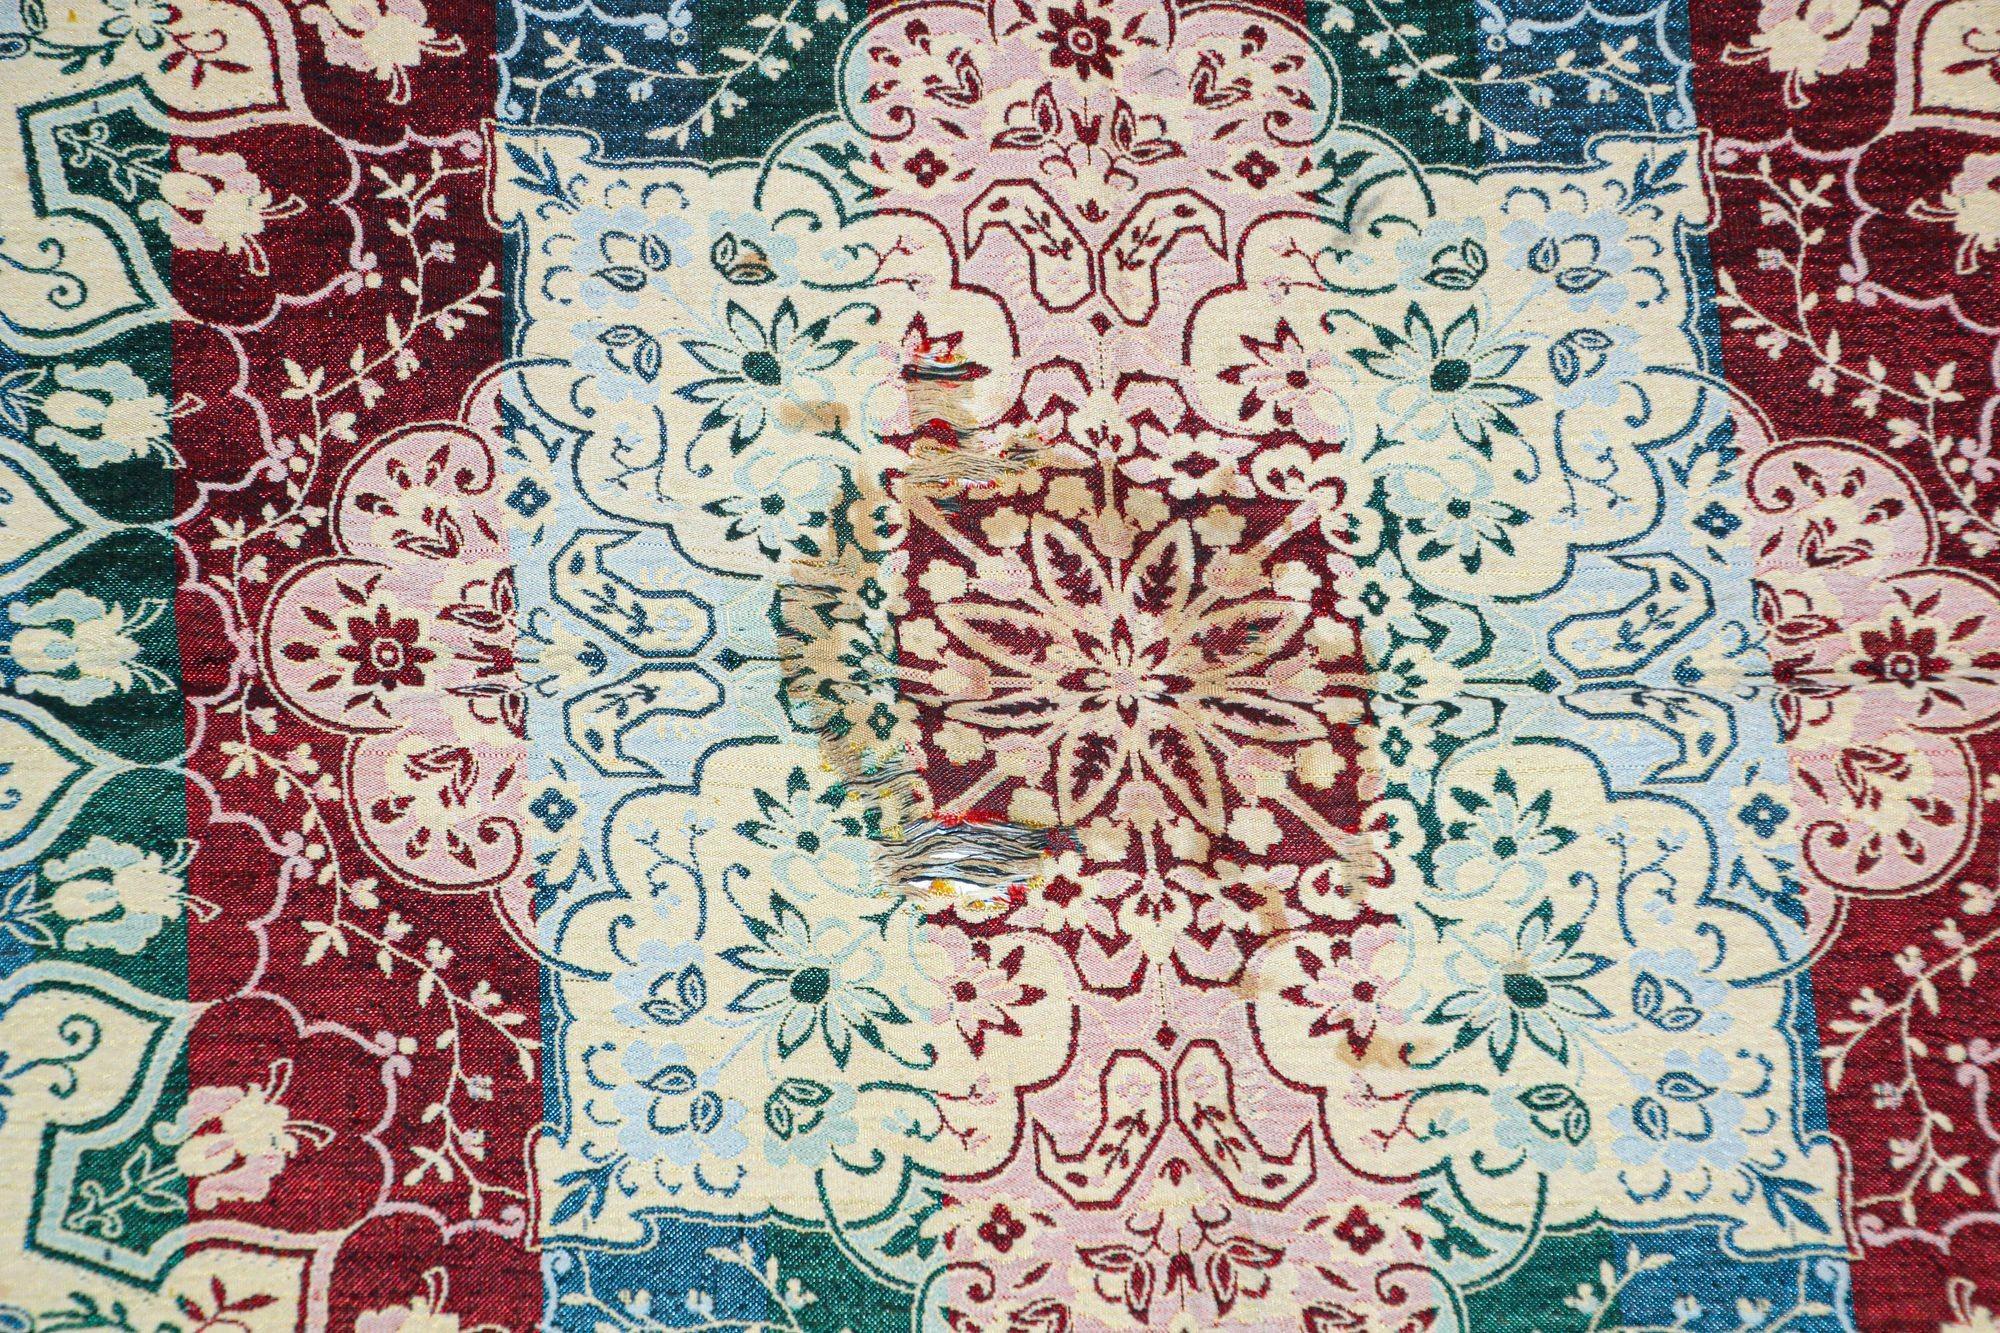 1920s Antique Granada Spain Moorish Islamic Tapestry with Arabic Writing 6